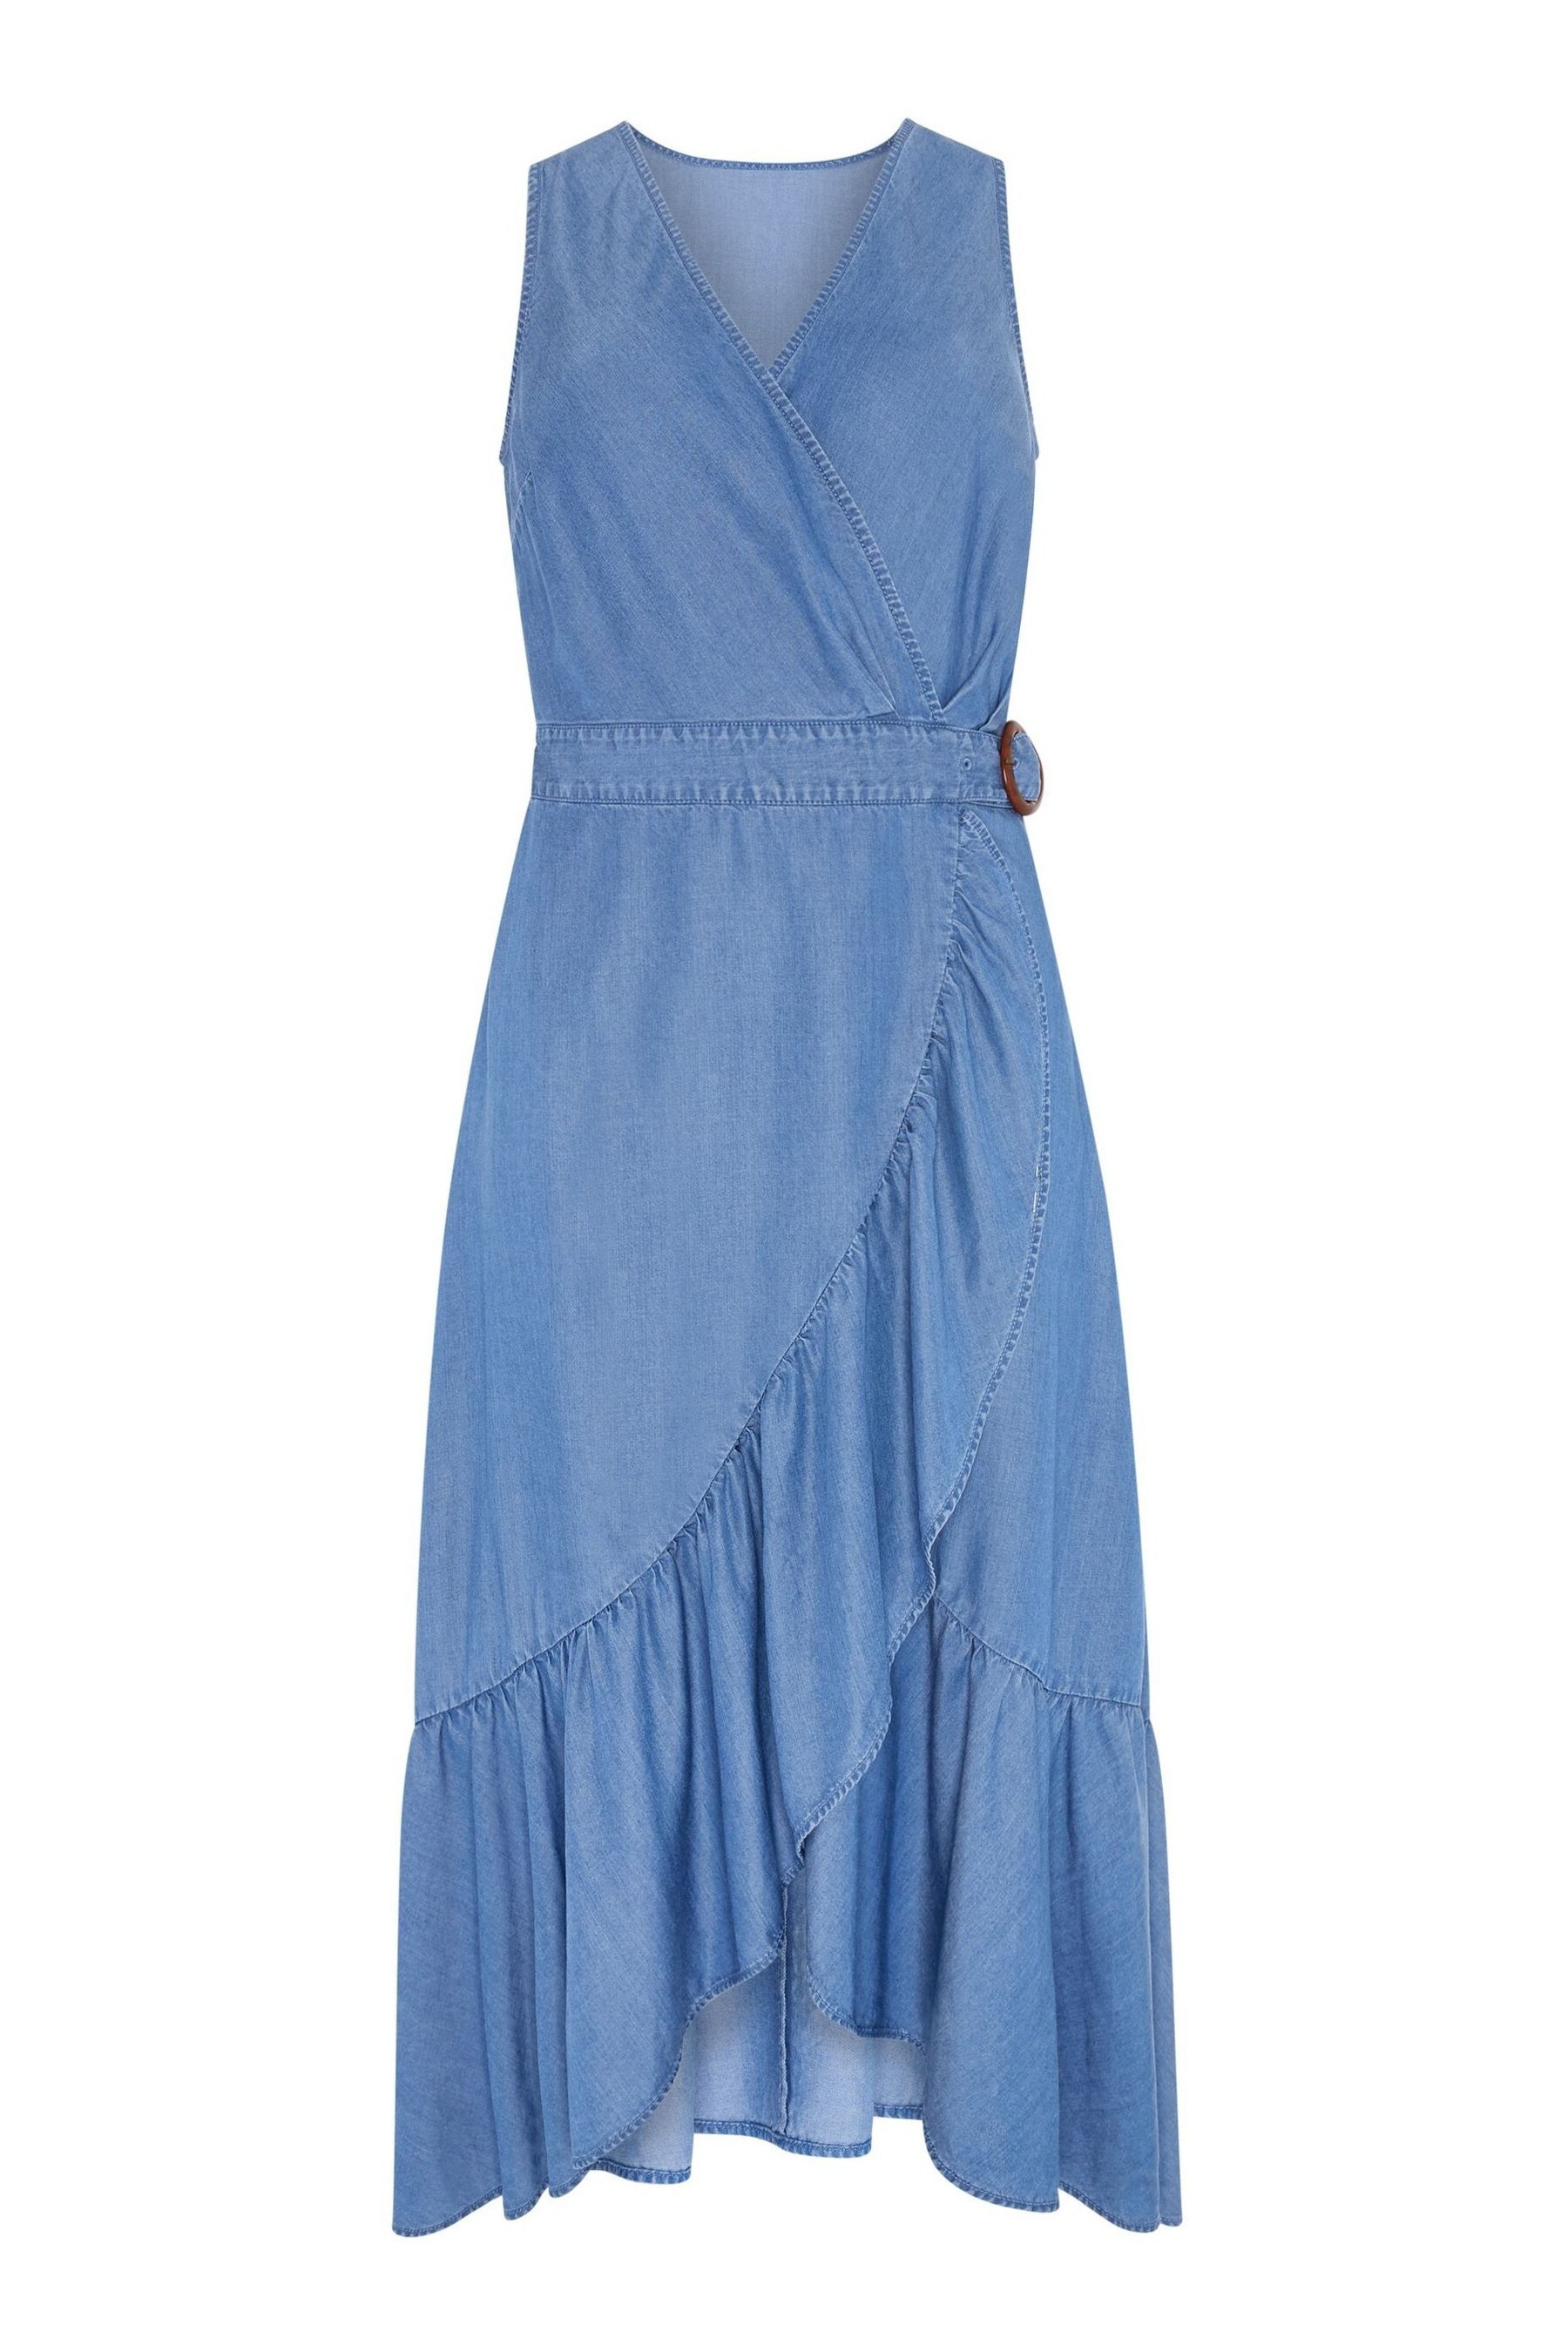 Buy F&F Blue Denim T Midi Ruffle Dress from the Next UK online shop